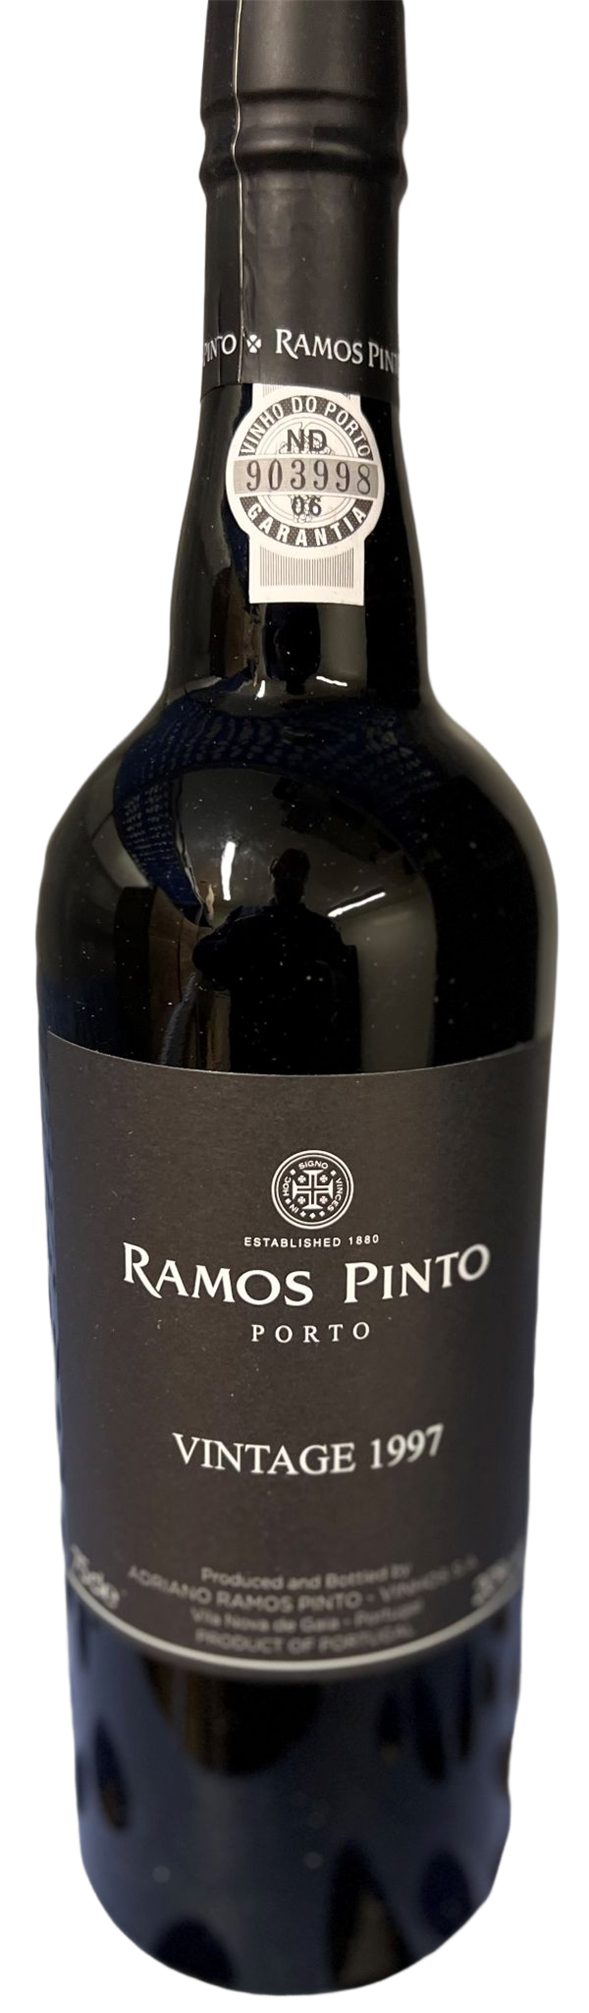 Ramos Pinto Vintage 1997